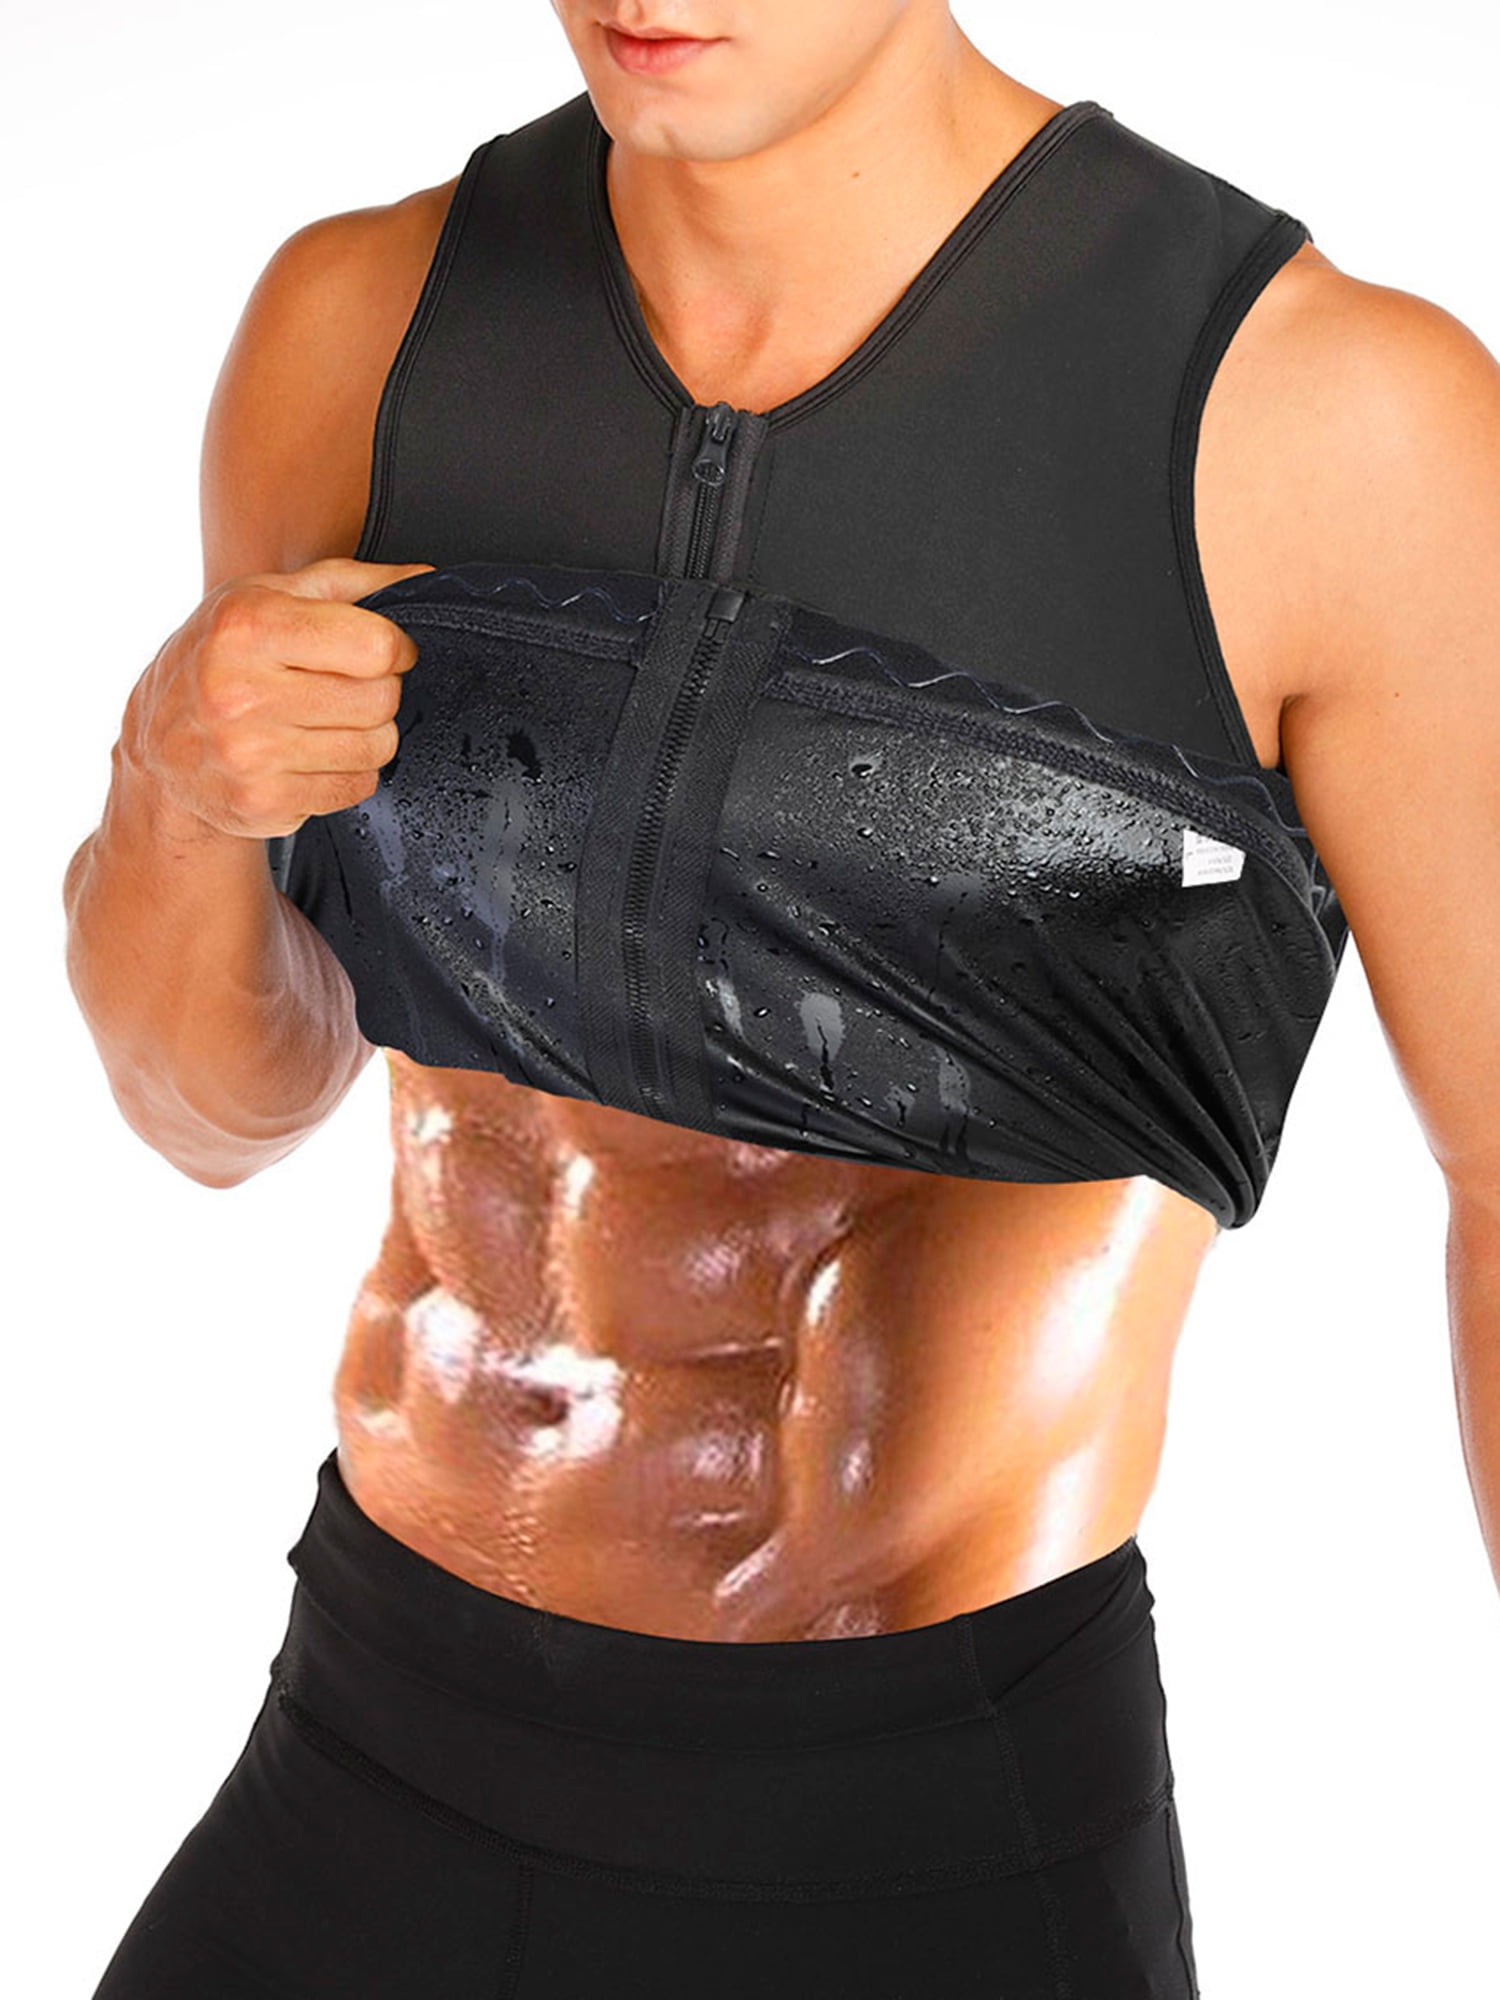 Men Neoprene Vest Sweat Shirt Sauna Suit Slim Weight Loss Workout Body Shaper US 